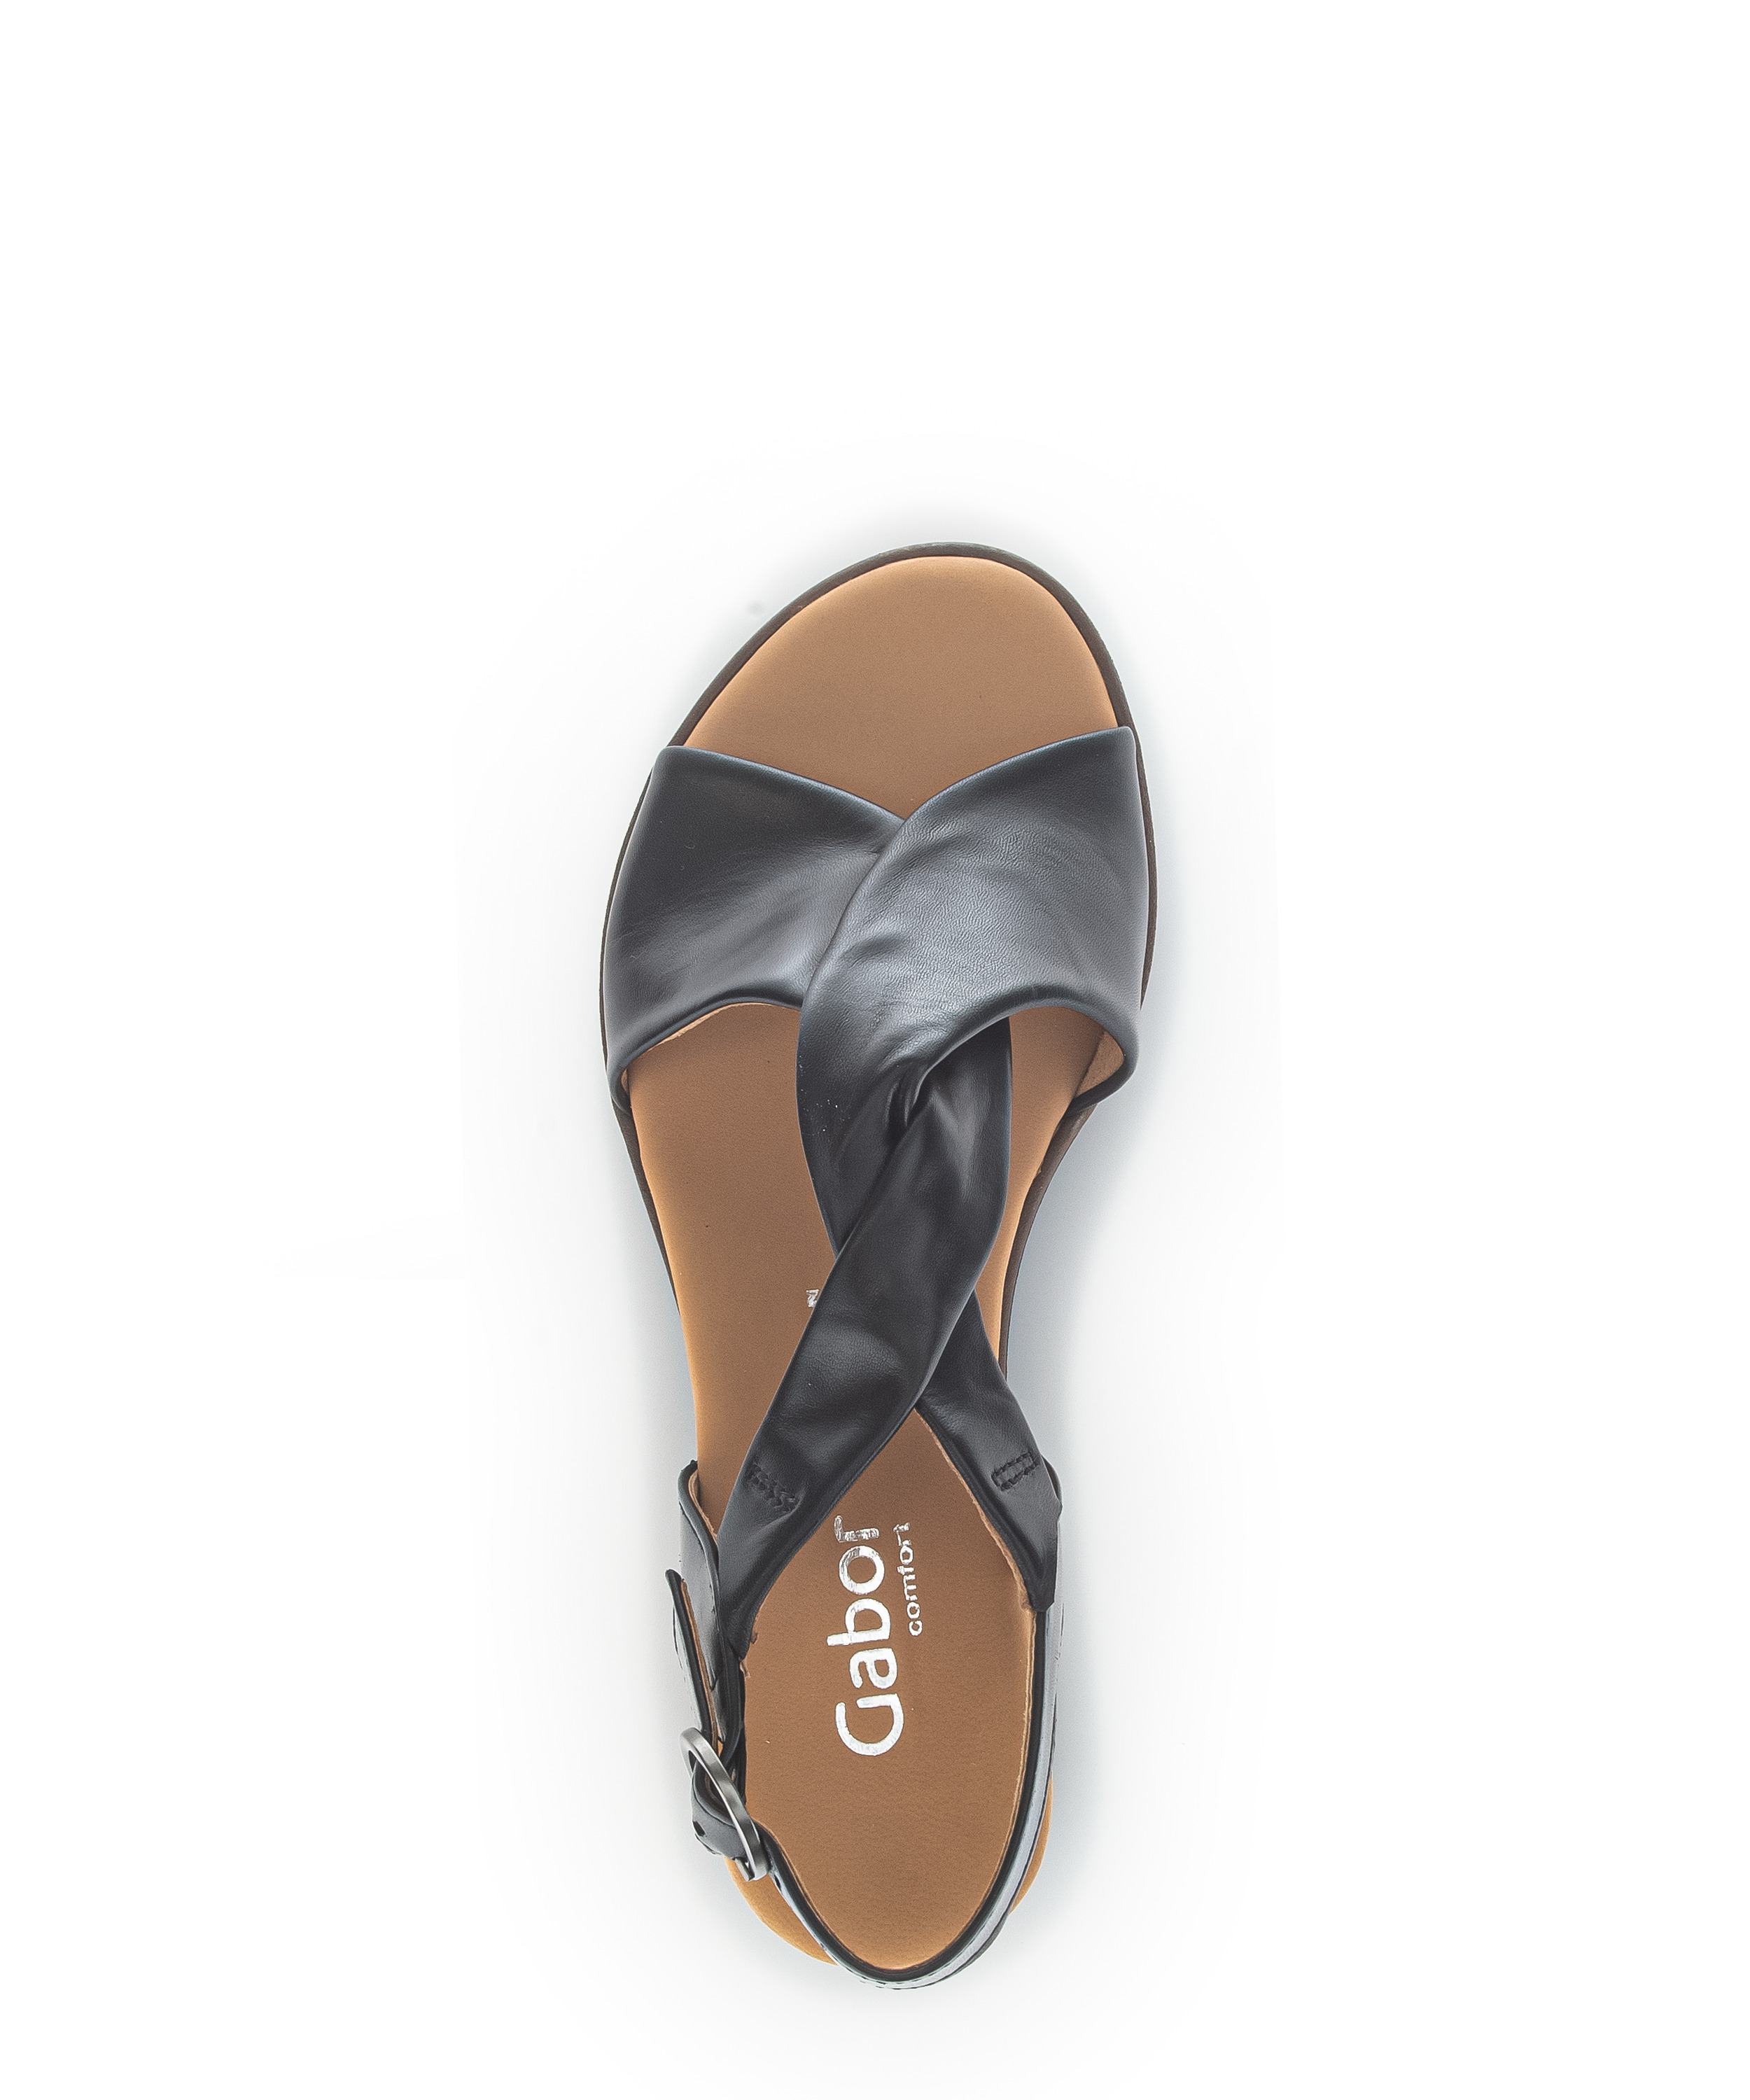 Gabor Shoes Keilsandalette - Schwarz Glattleder